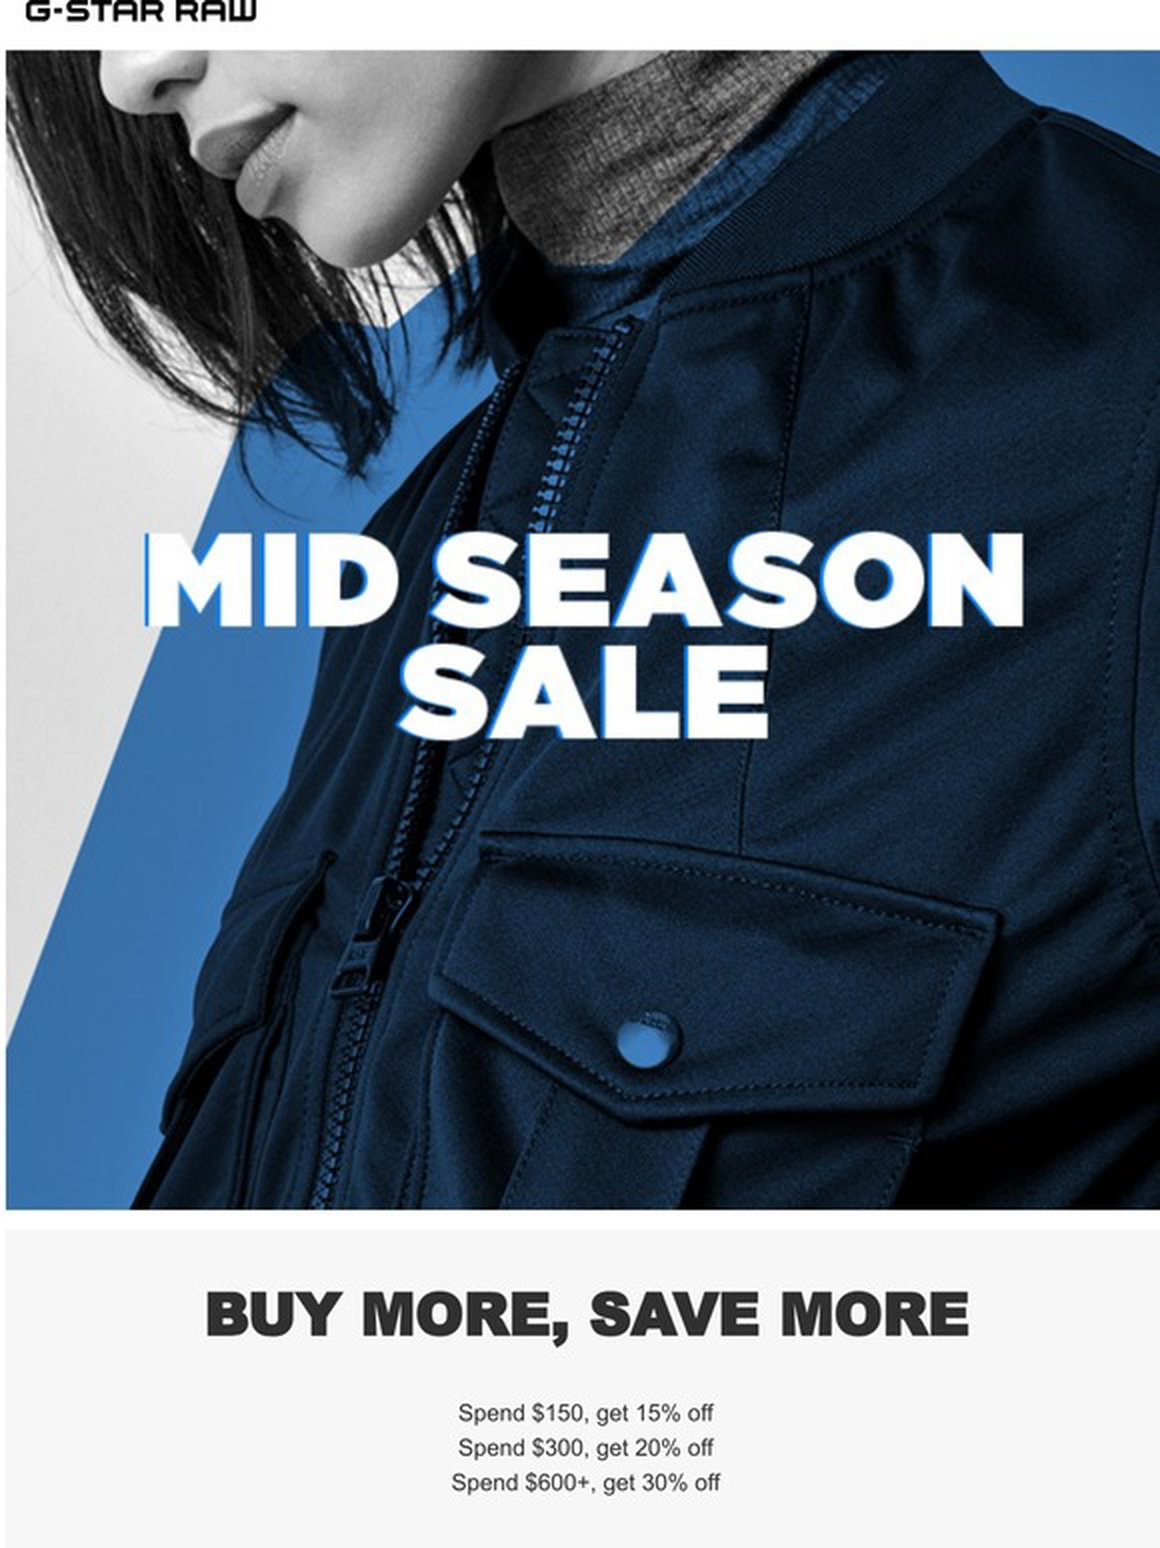 g star mid season sale